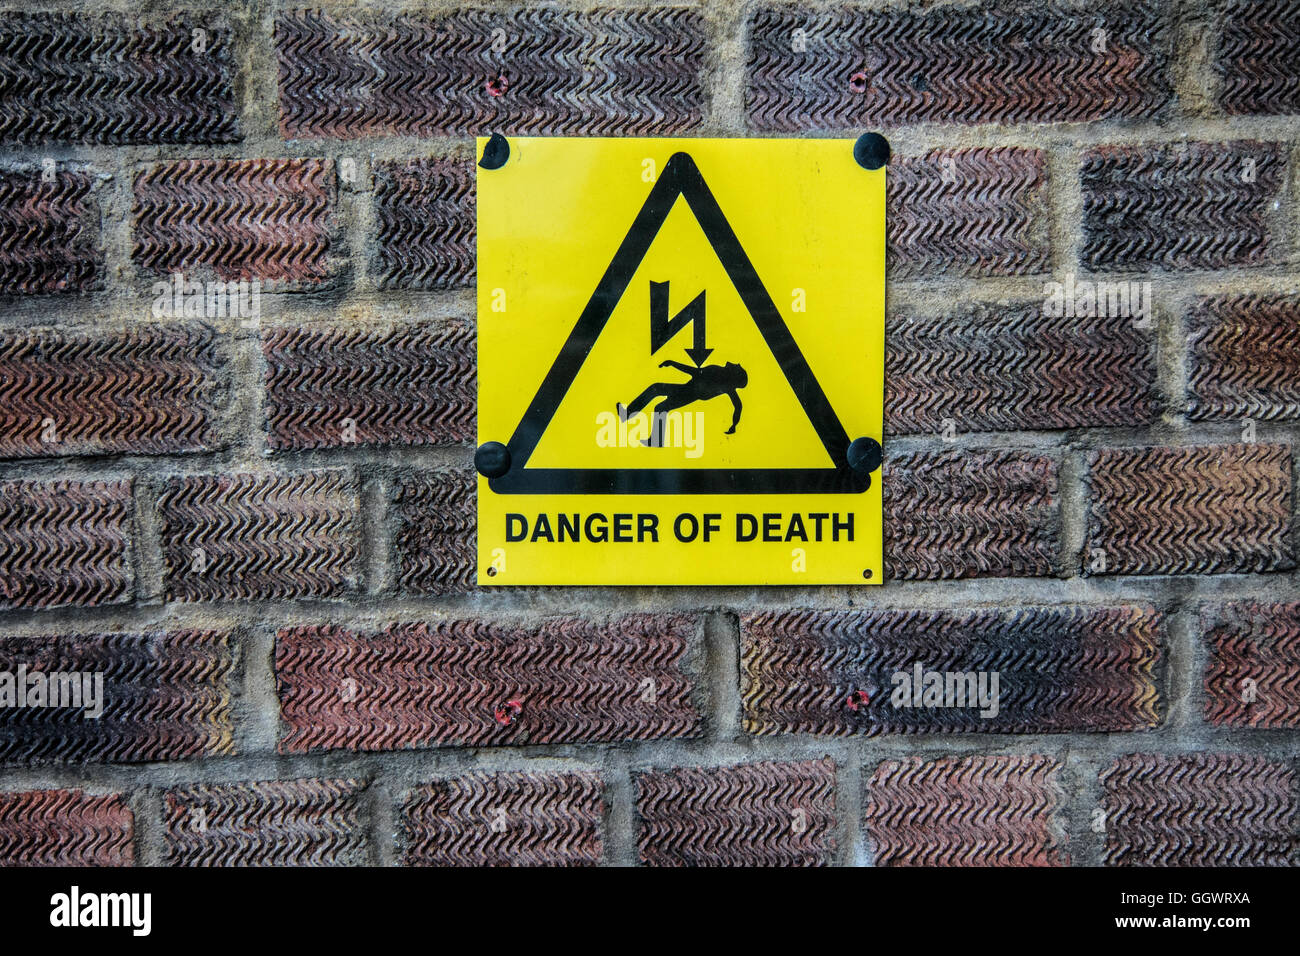 'Danger of Death' sign on brick wall - Berkhamsted, UK Stock Photo